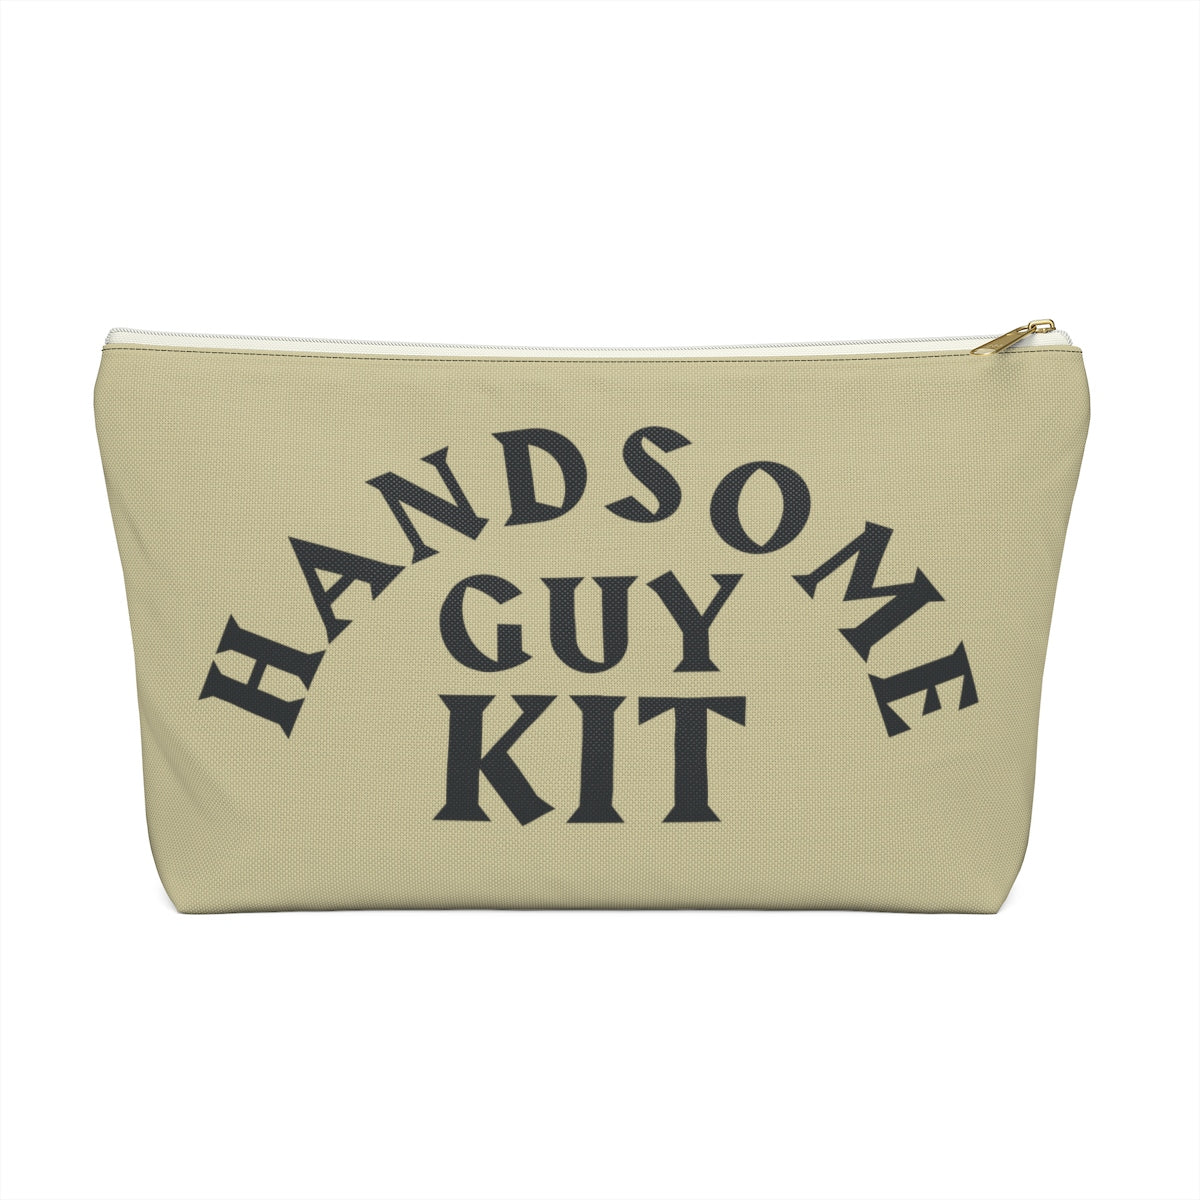 Funny Toiletry Bag for Him, Handsome Guy Kit Wash Zipper Shaving Husband Man Boyfriend Son Gift Travel Dopp Accessory Pouch w T-bottom Starcove Fashion